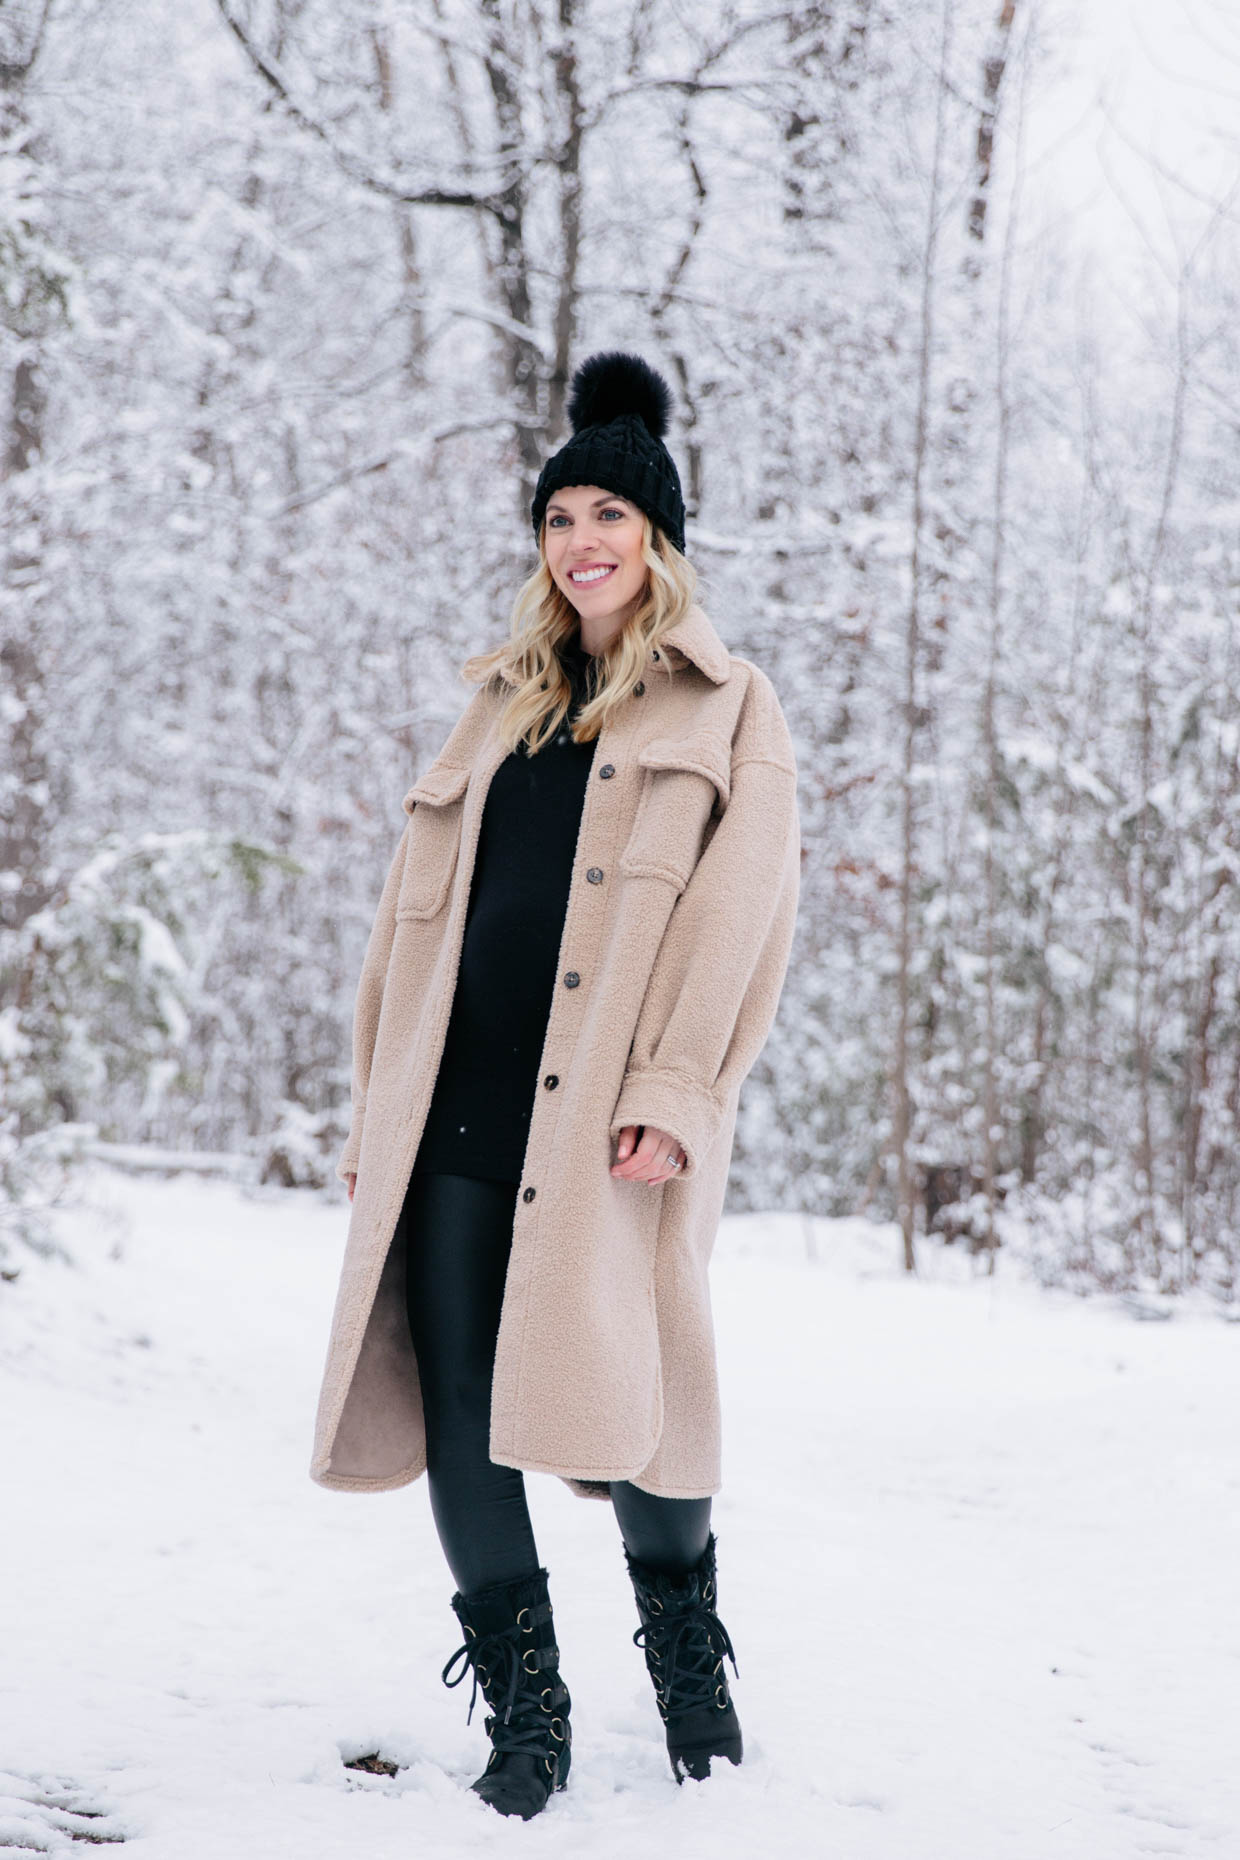 4 Ways to Look Stylish in the Snow - Meagan's Moda